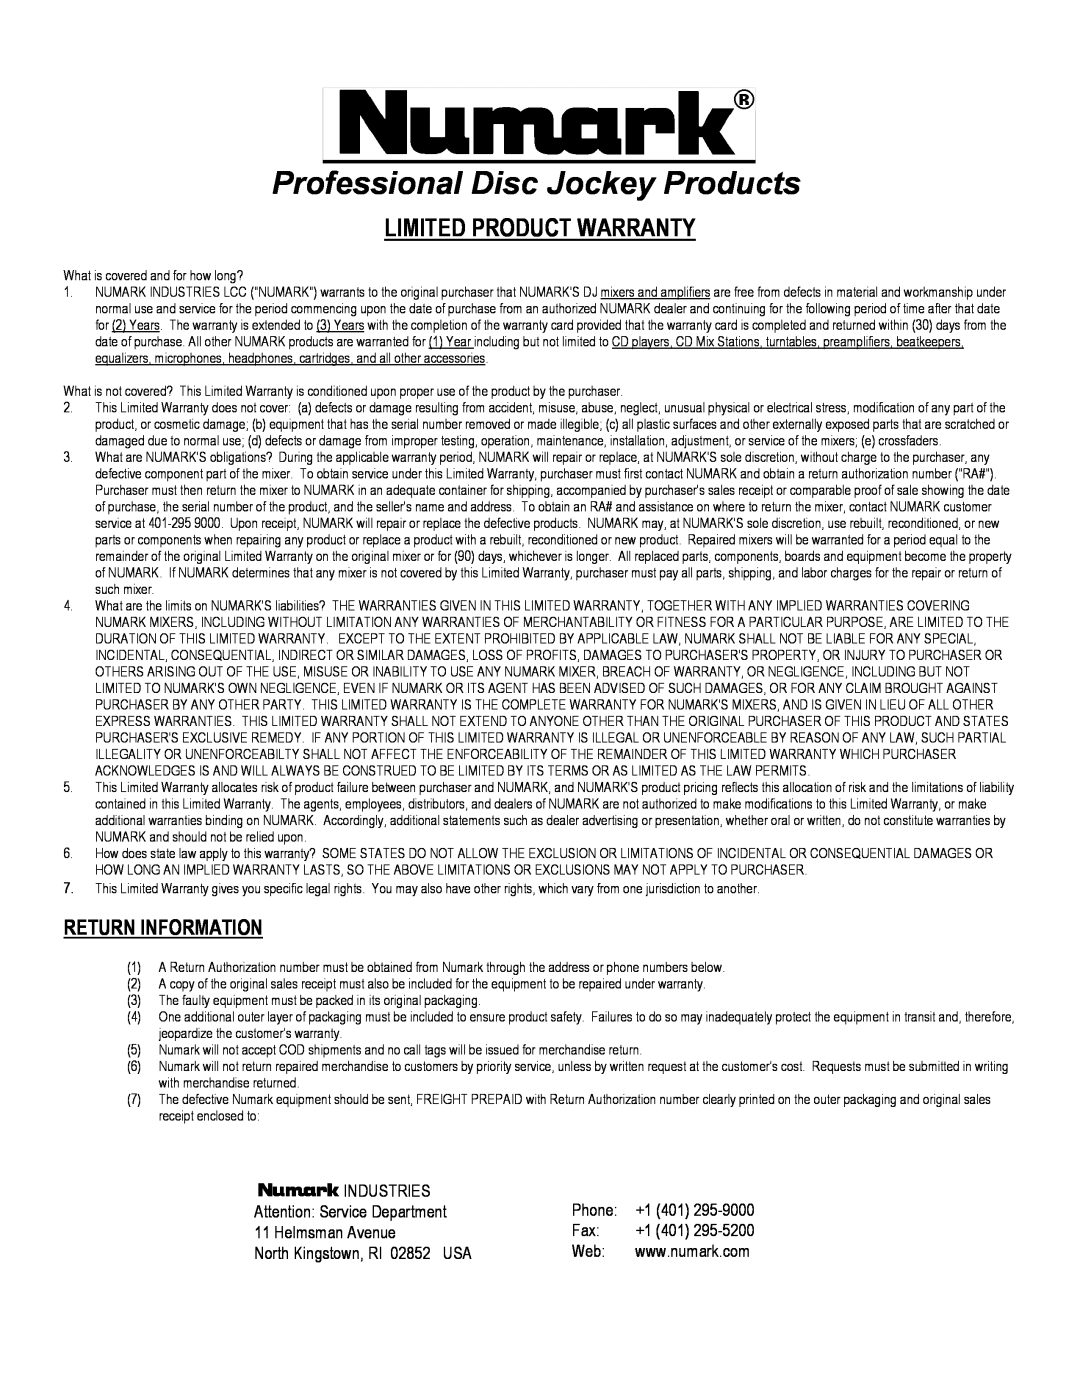 Numark Industries TT-100 owner manual Professional Disc Jockey Products, Limited Product Warranty, Return Information 